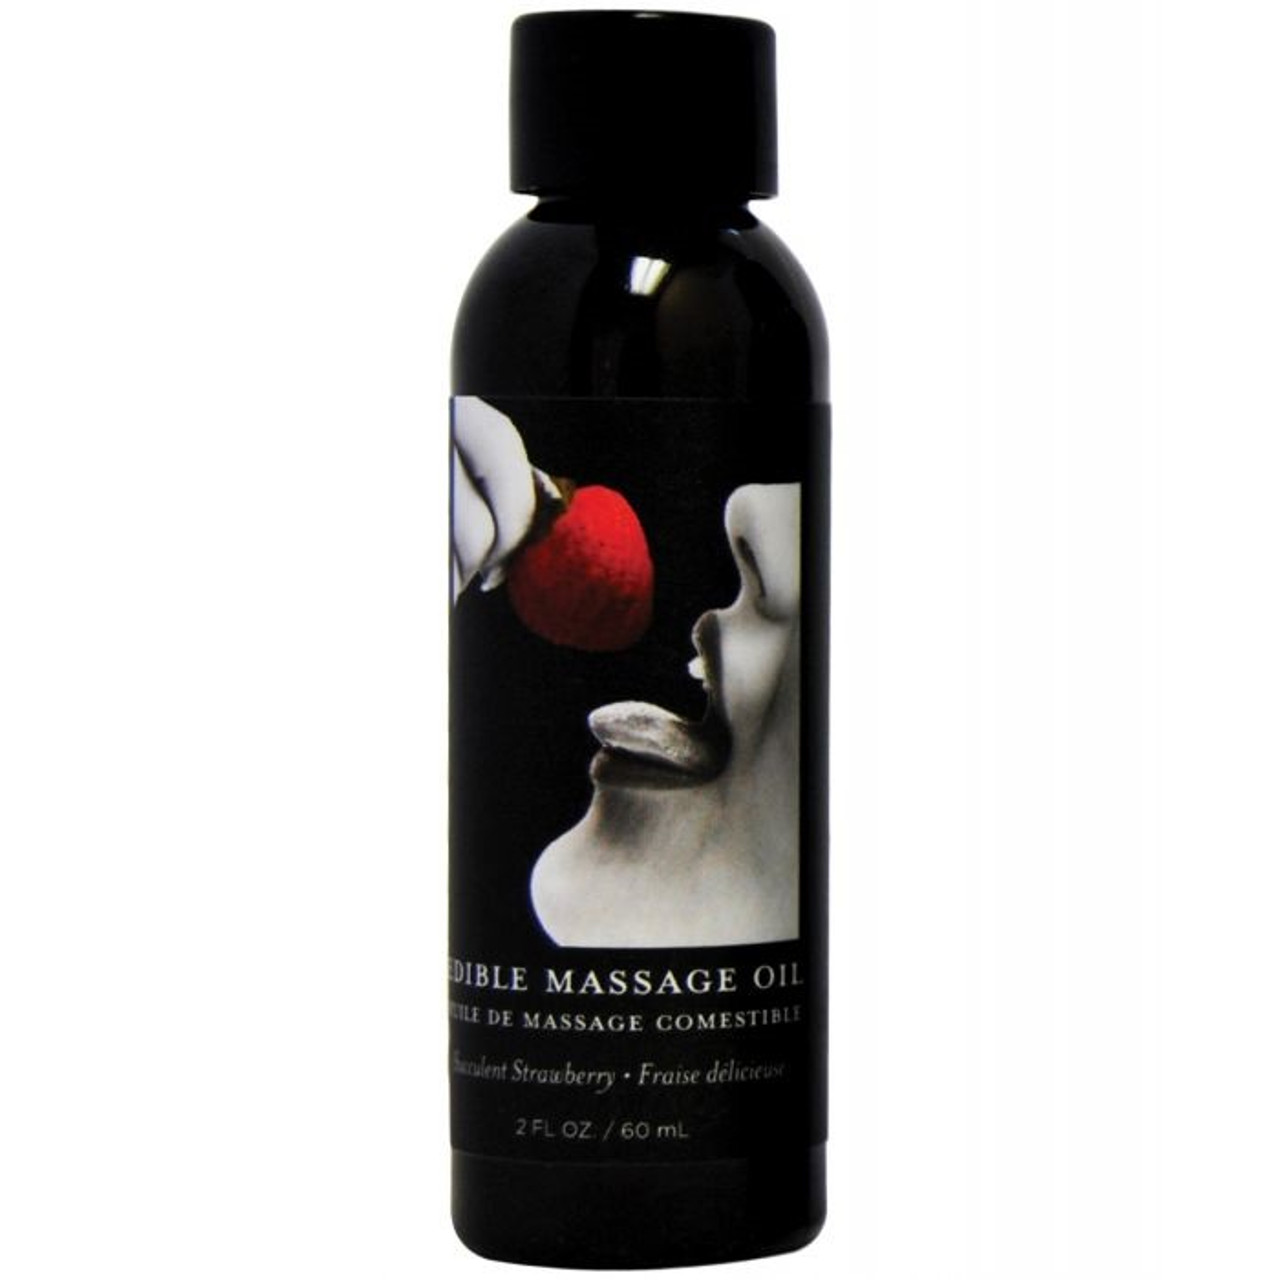 Edible Massage Oil Succulent Strawberry - 2 oz